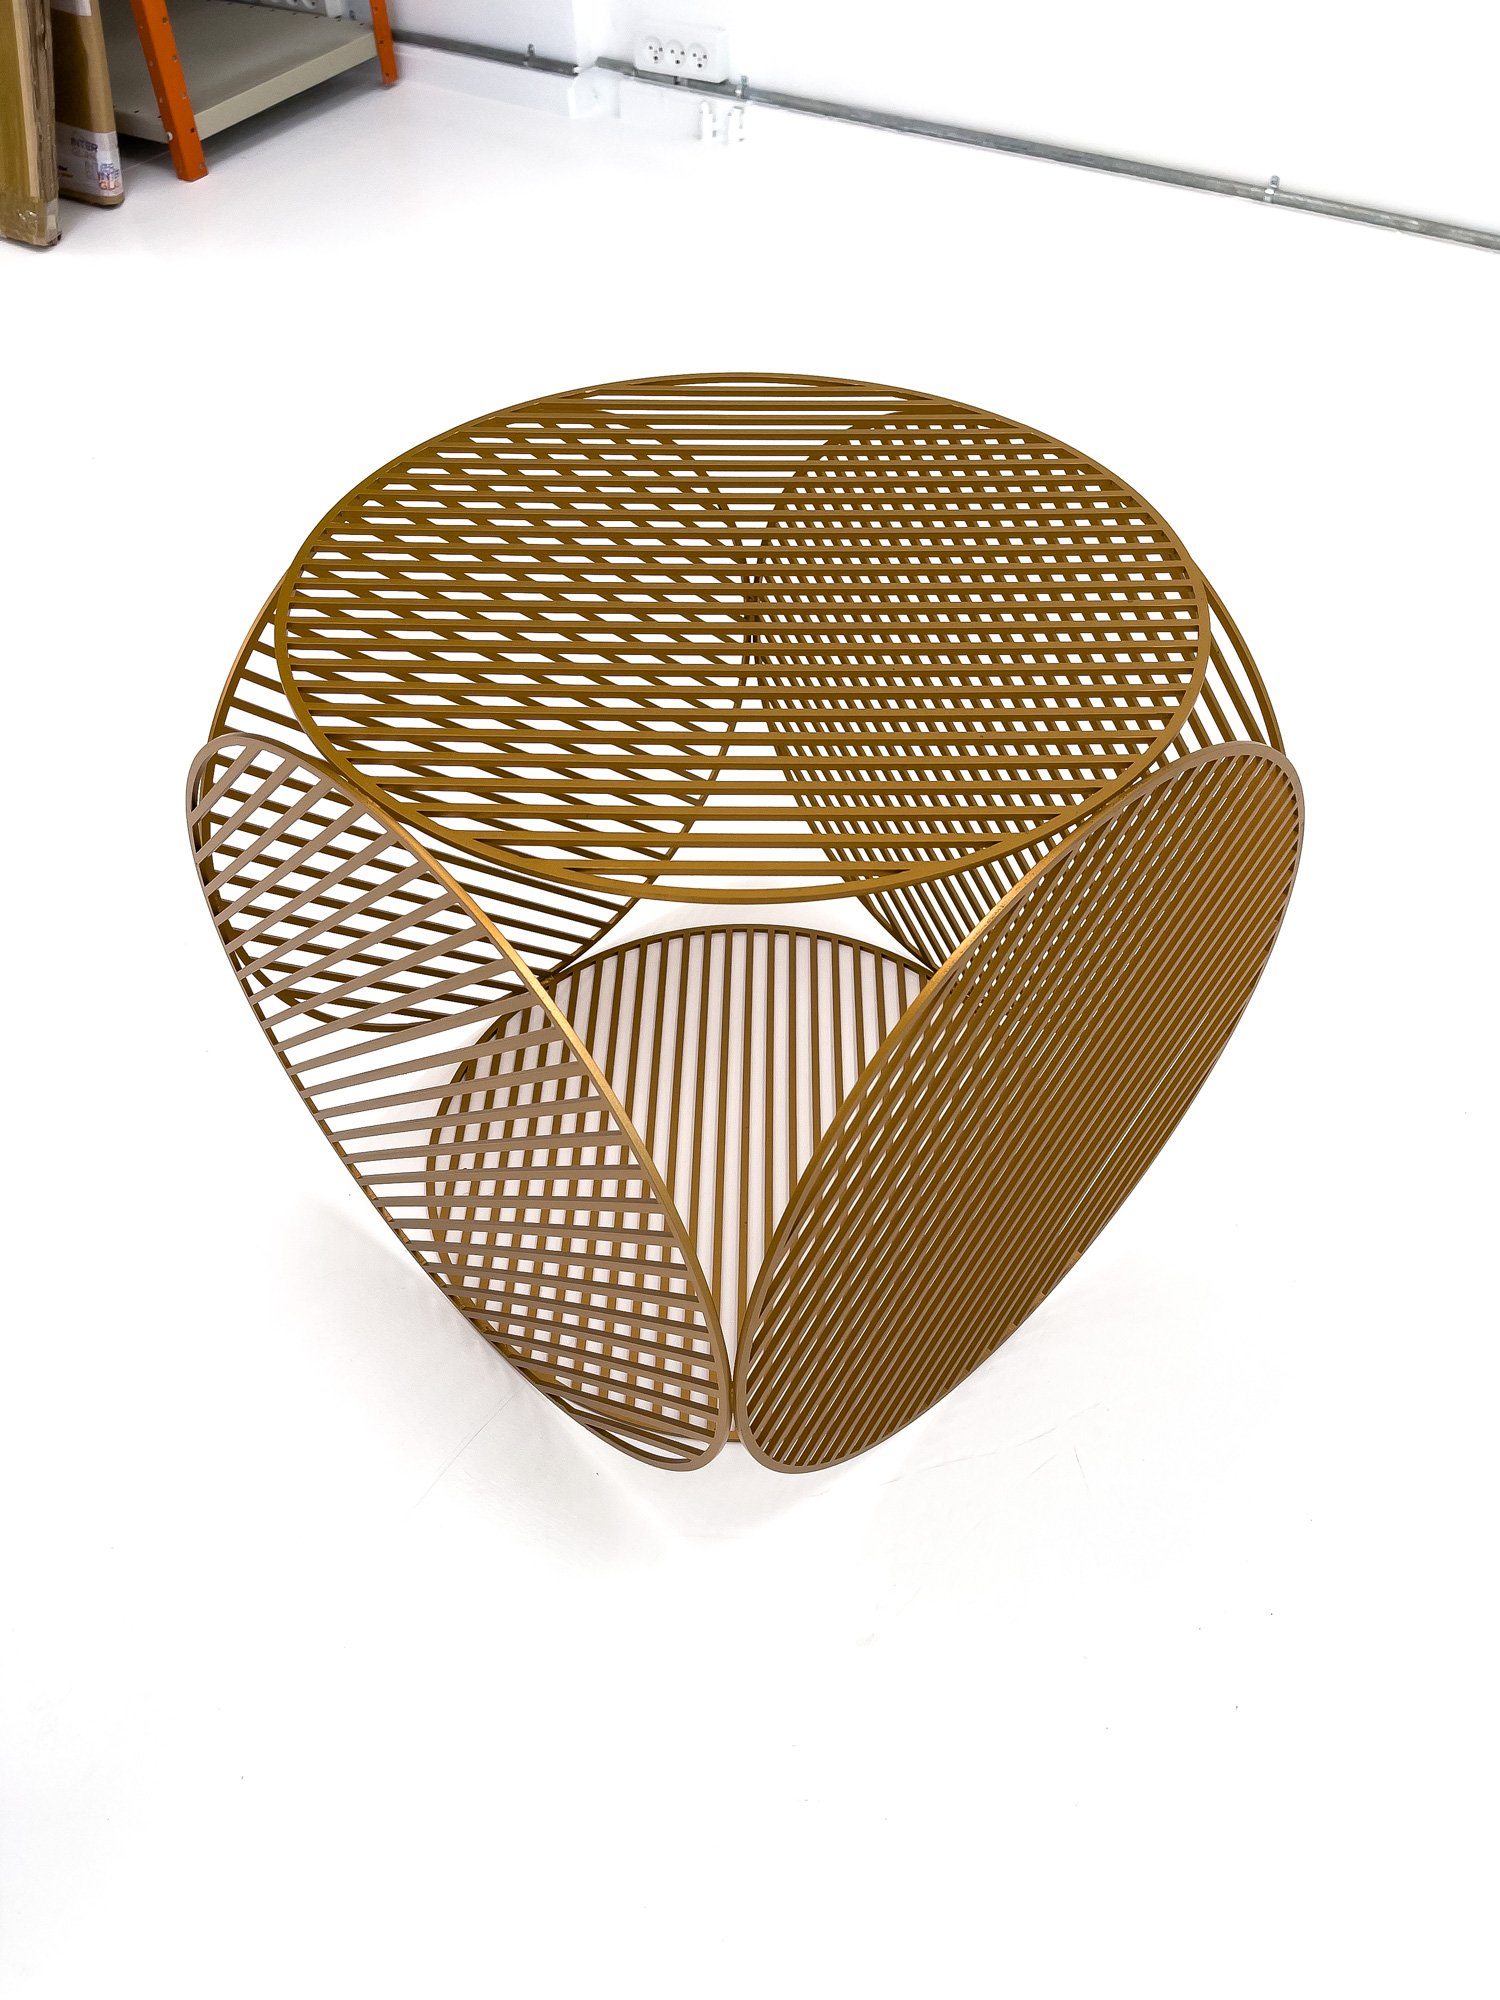 Studio-Roso_Cube table steel gold 02.jpg